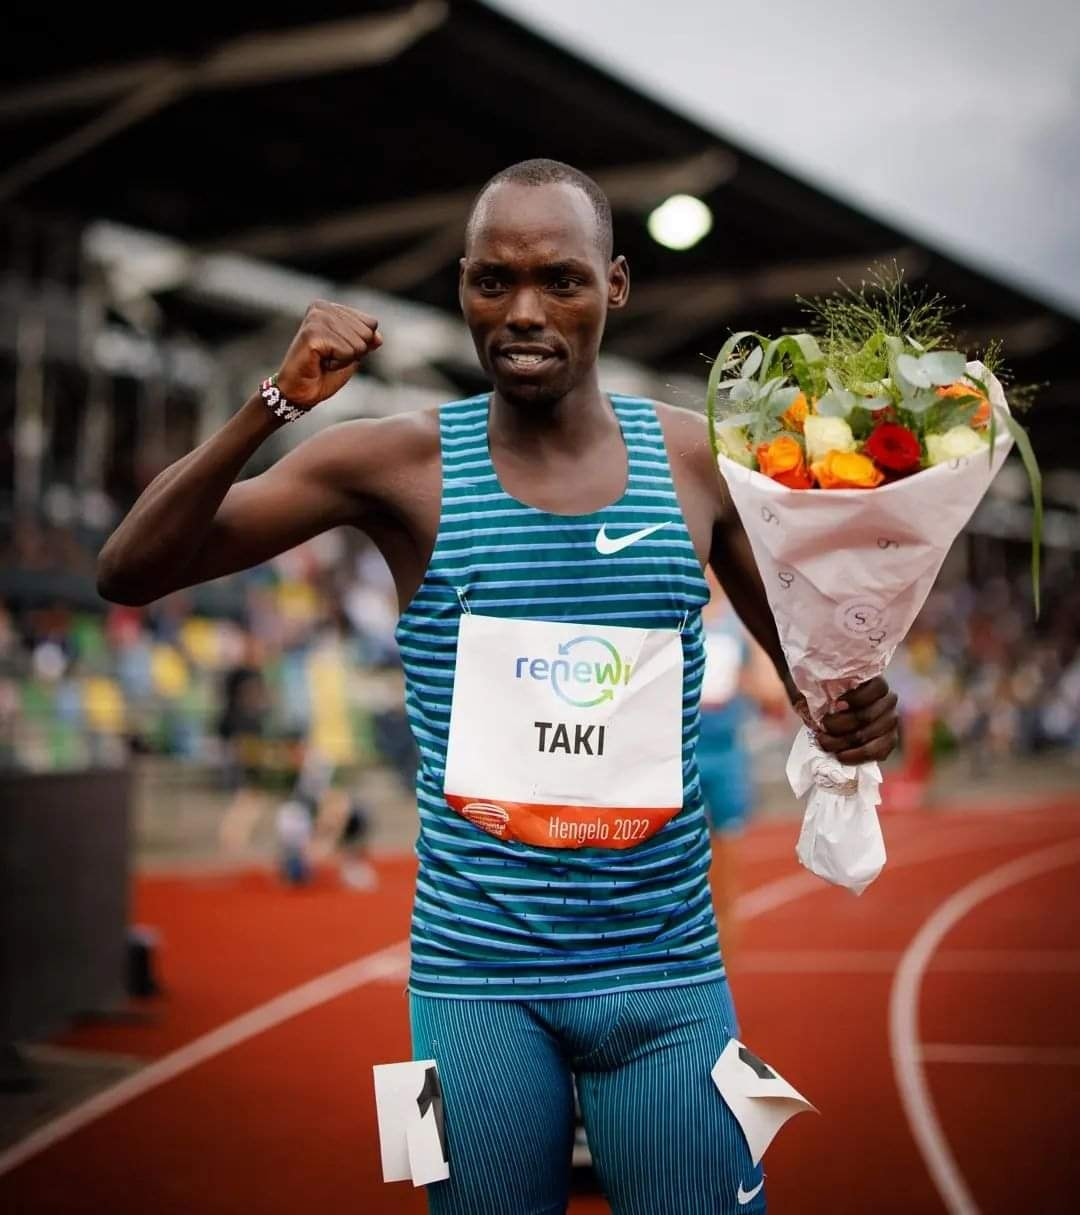 Kumari Taki was among dozens of Kenyan runners implicated in doping last year ©Getty Images